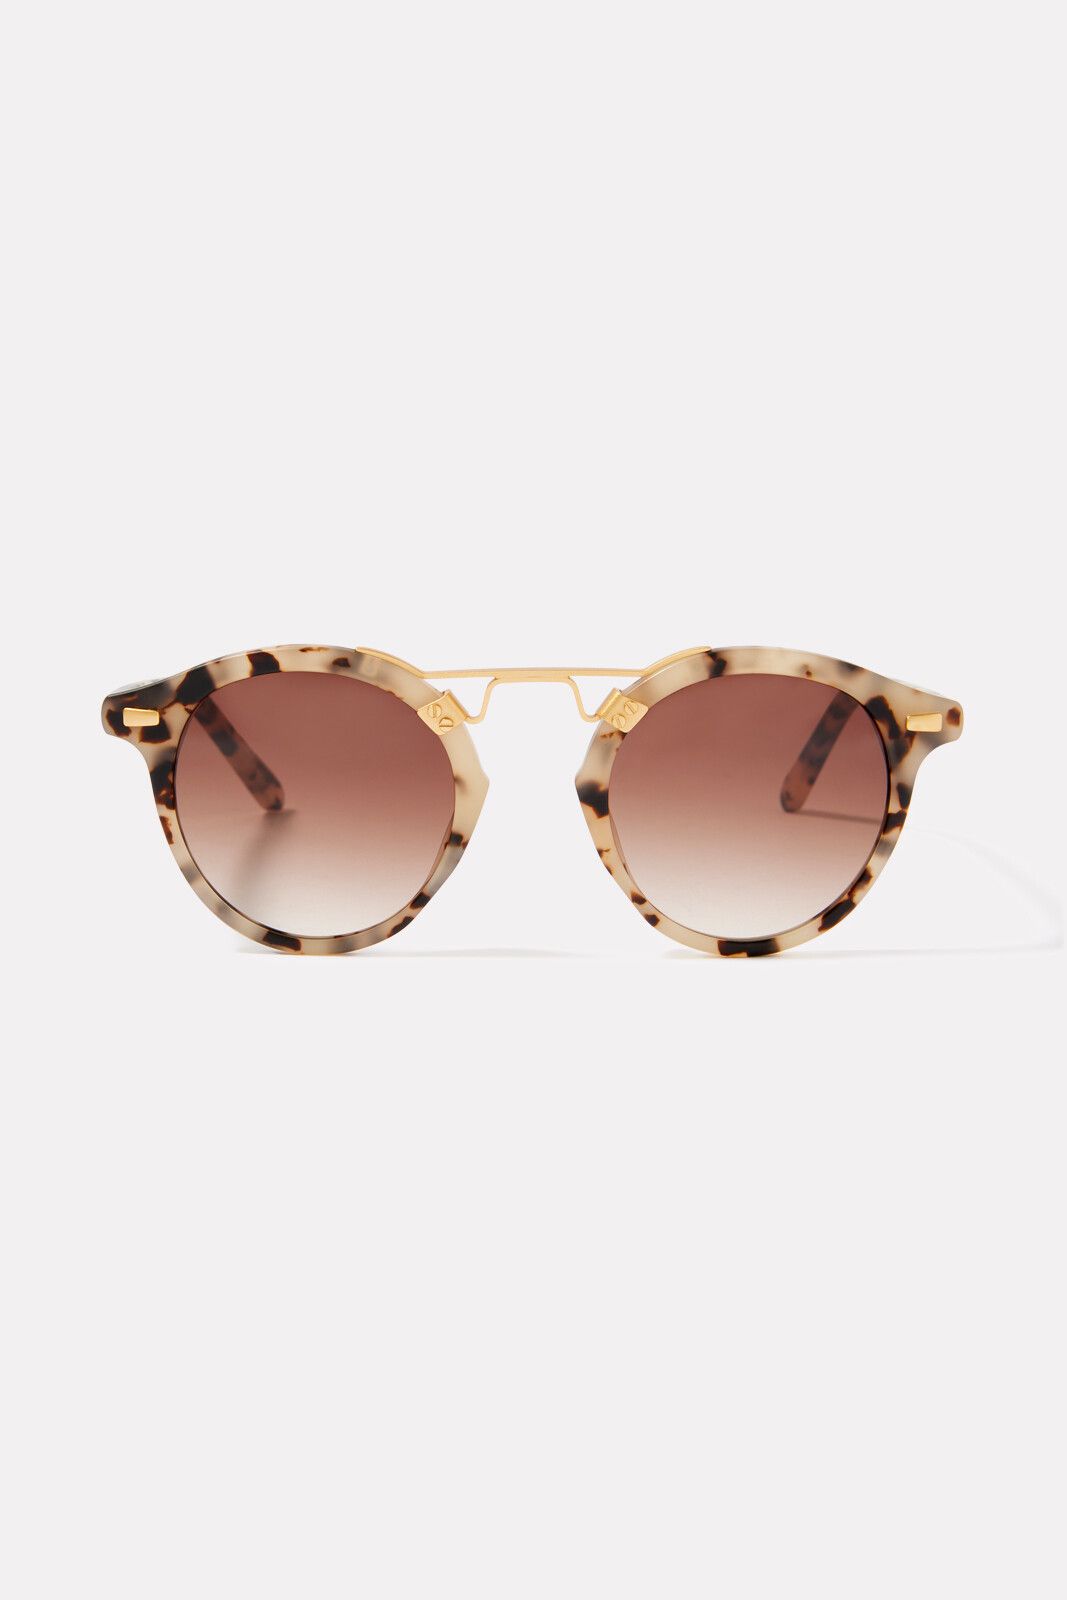 St. Louis Sunglasses | EVEREVE